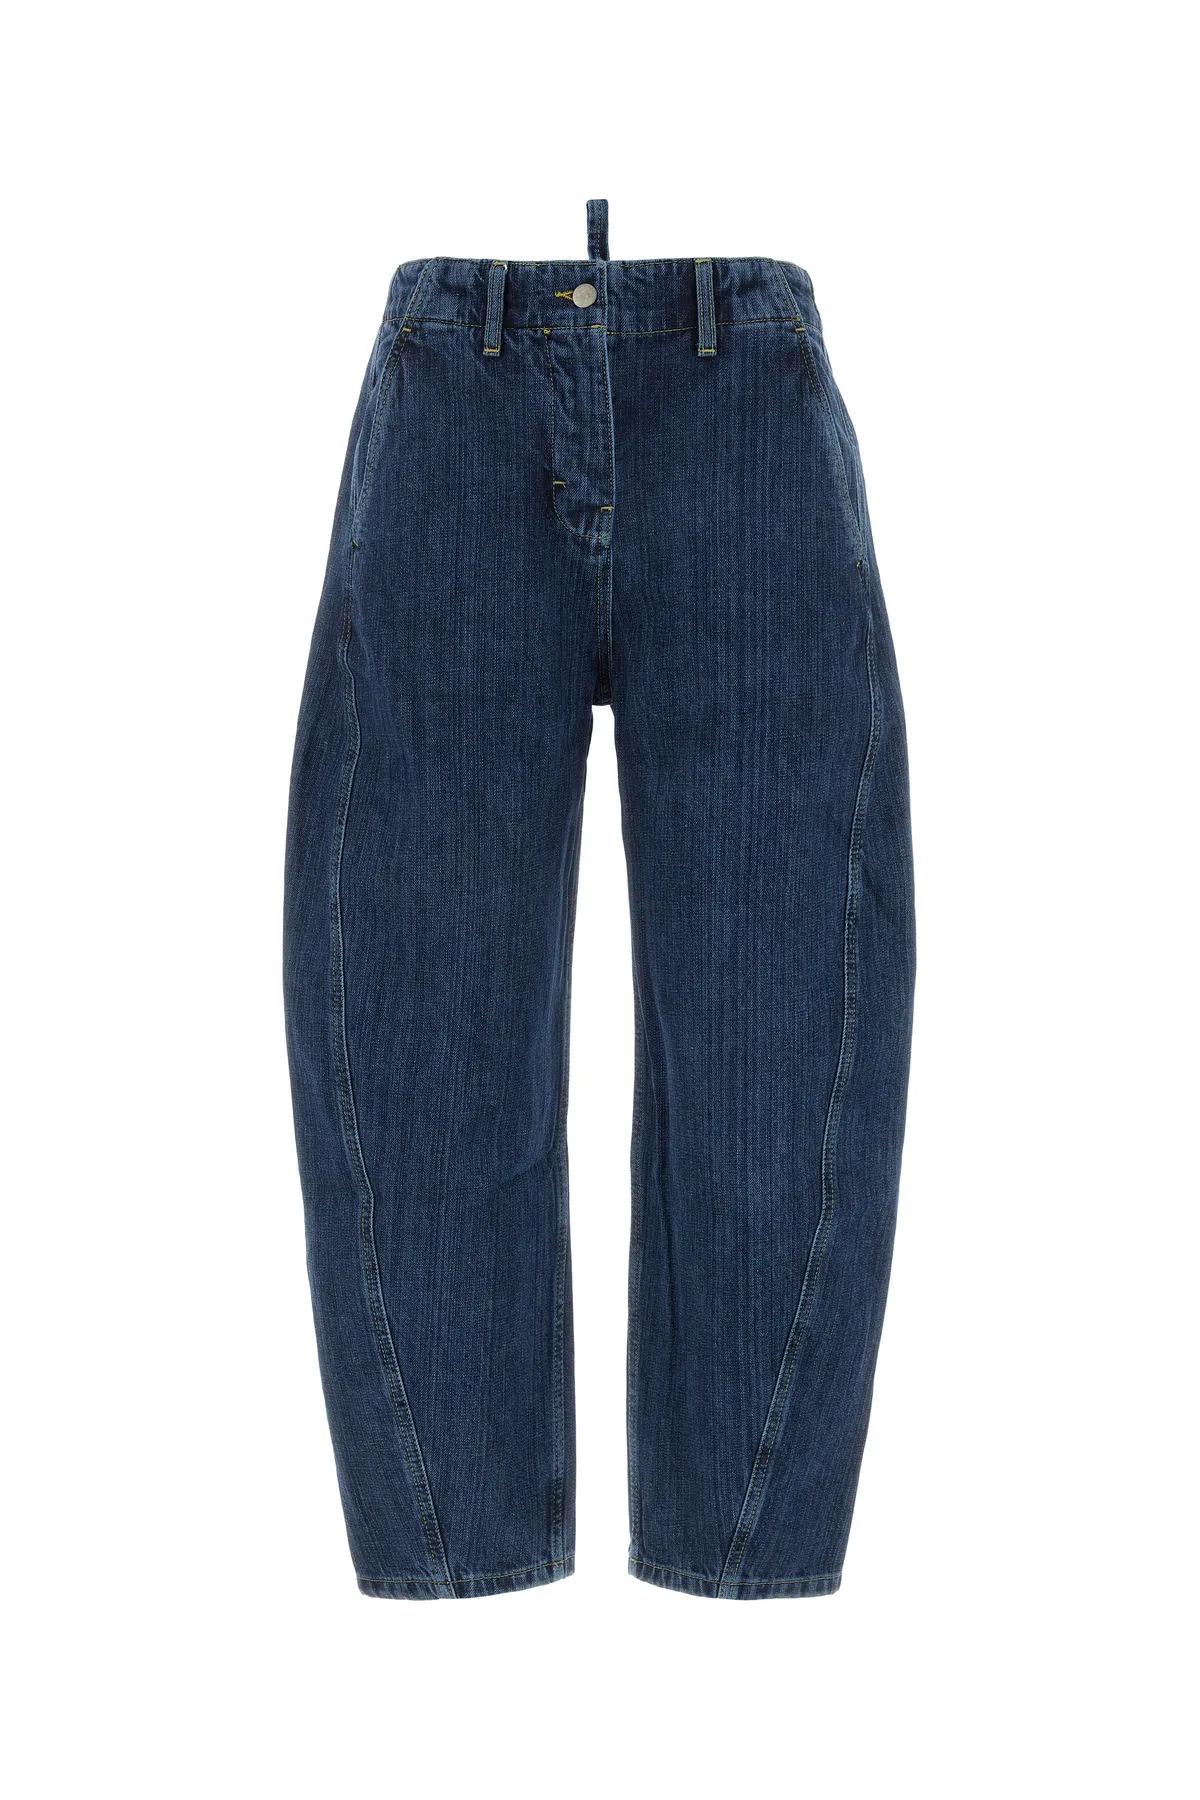 studio nicholson denim akerman jeans